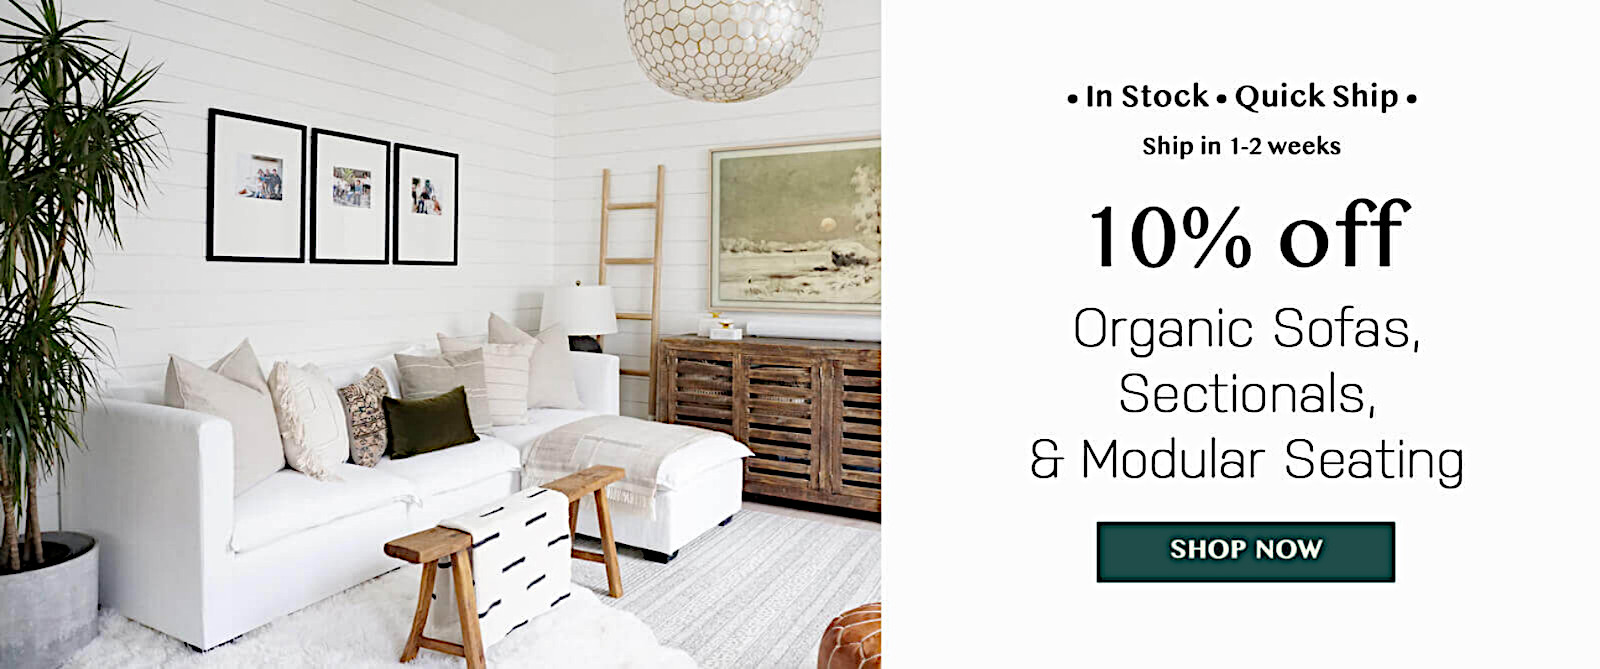 organic sofas sectionals modular seating discounted price